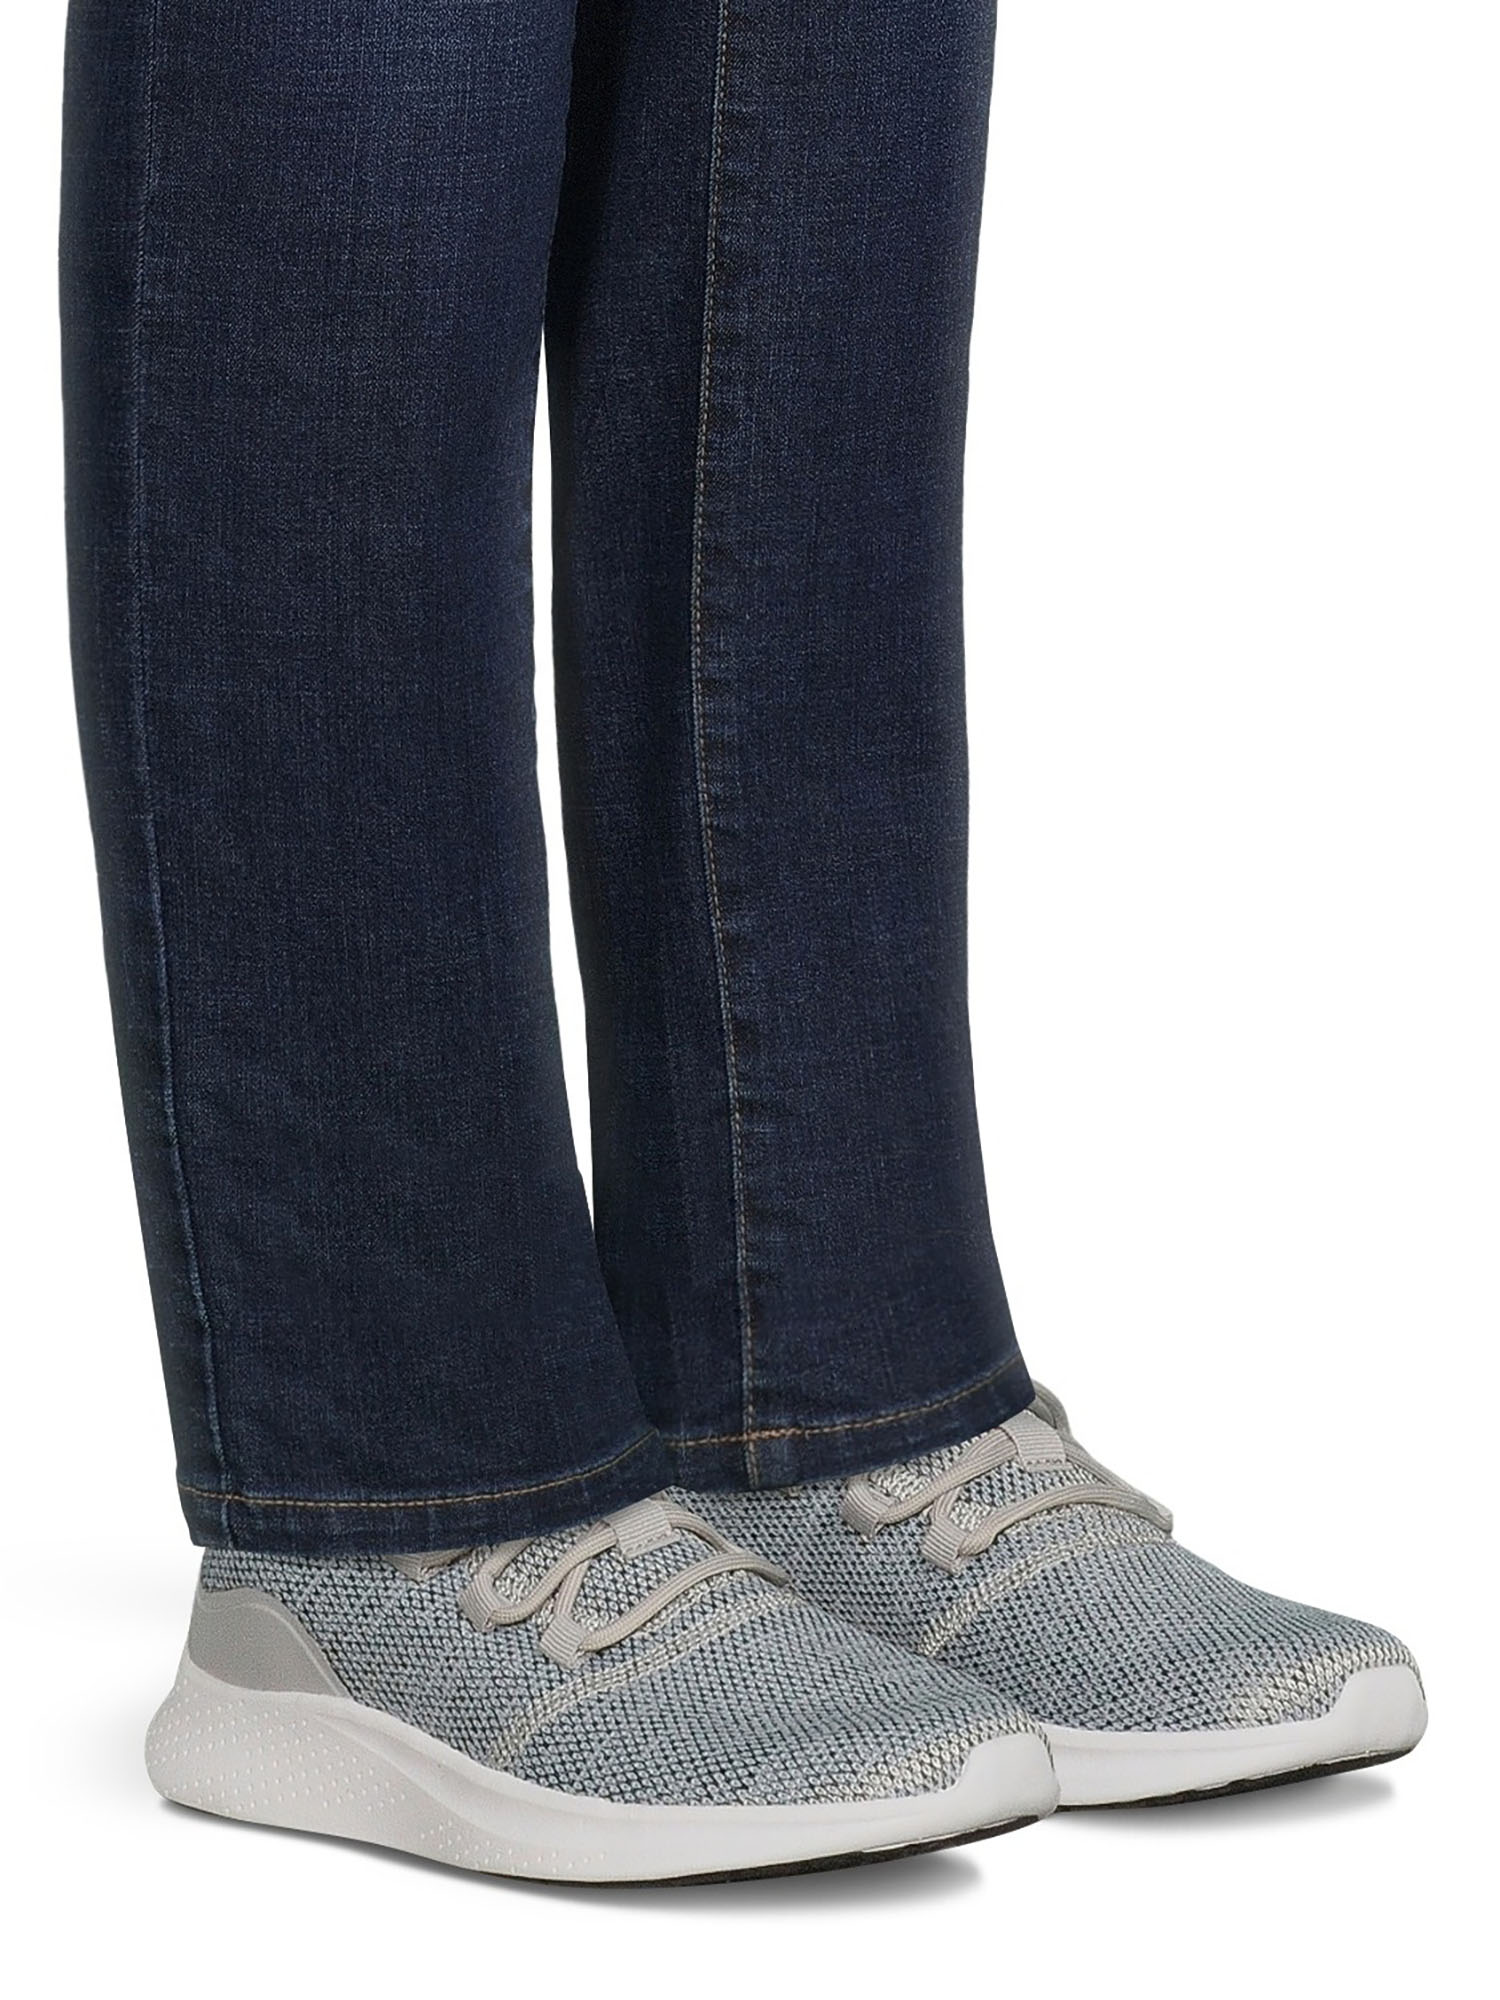 Avia Women's Knit Sneakers - image 2 of 7